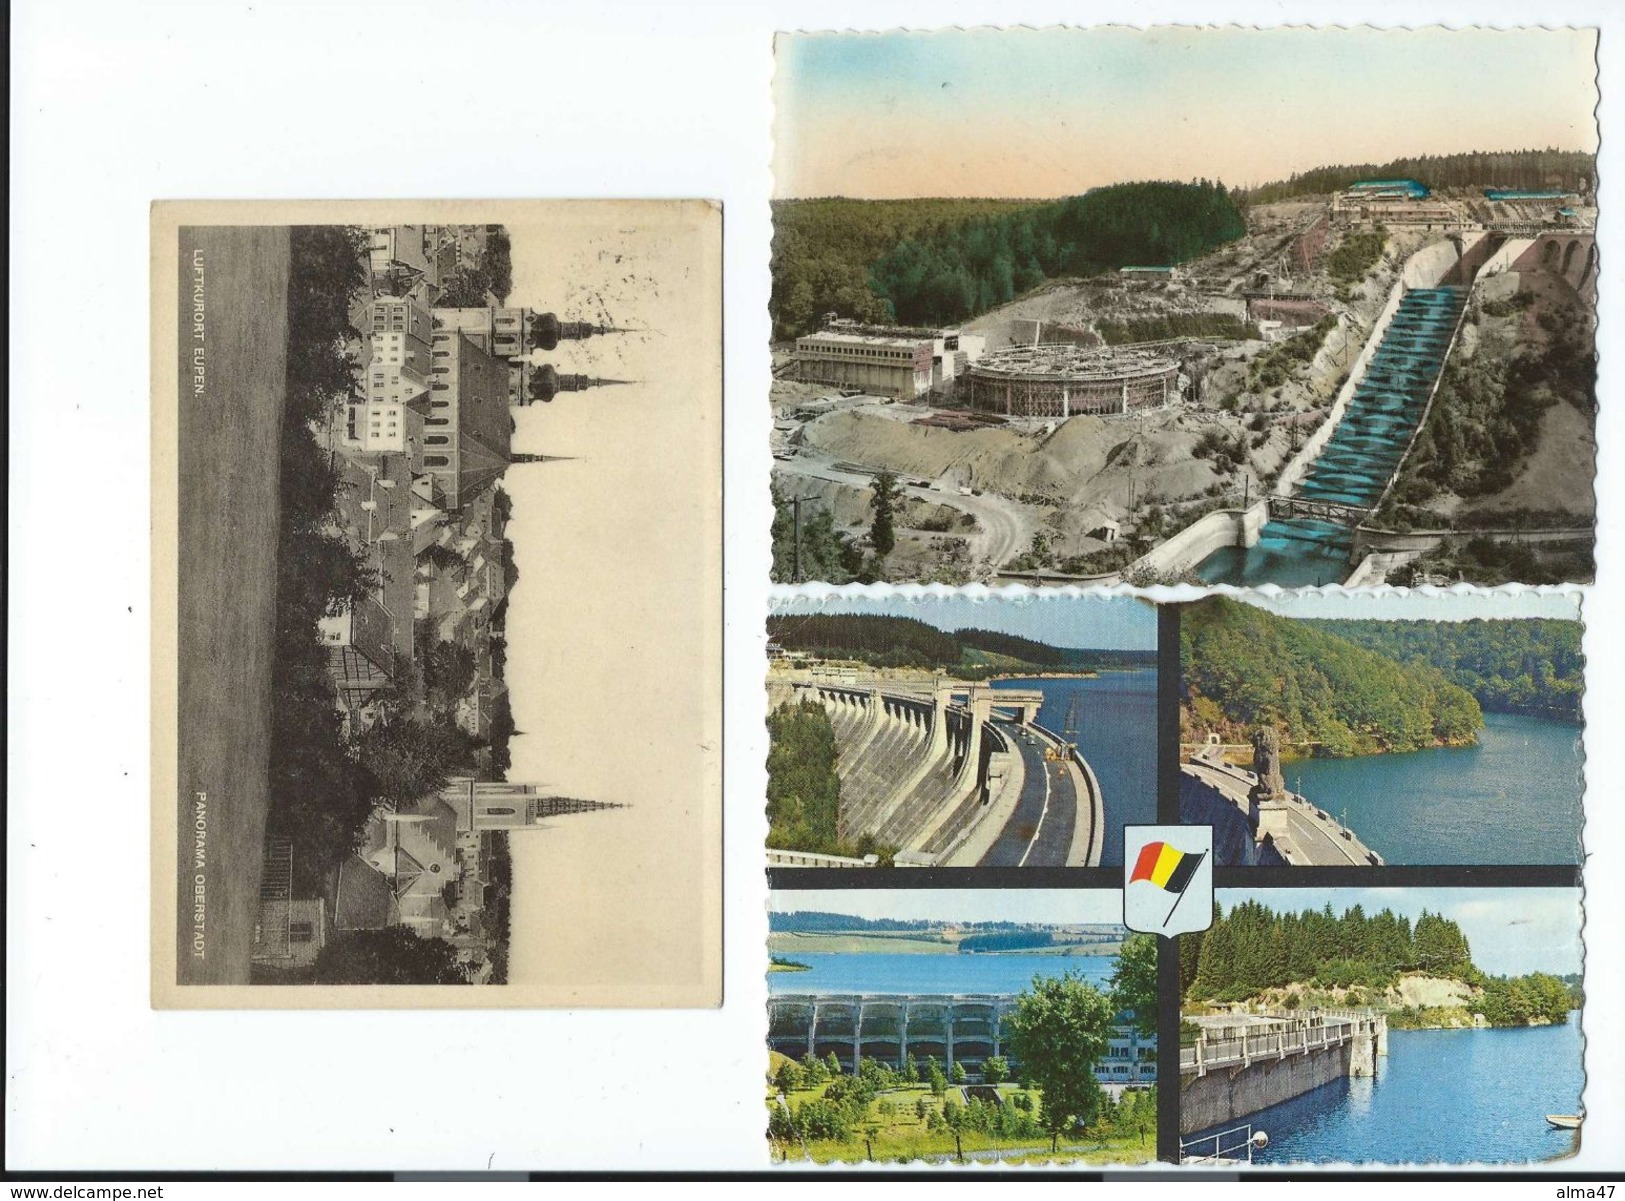 EUPEN - LOT 3 CP - Barrage Vesdre En Construction Circulé 1953 -- Les 4 Barrages Circulé 1963 -- Pano Ville Circulé 1935 - Eupen